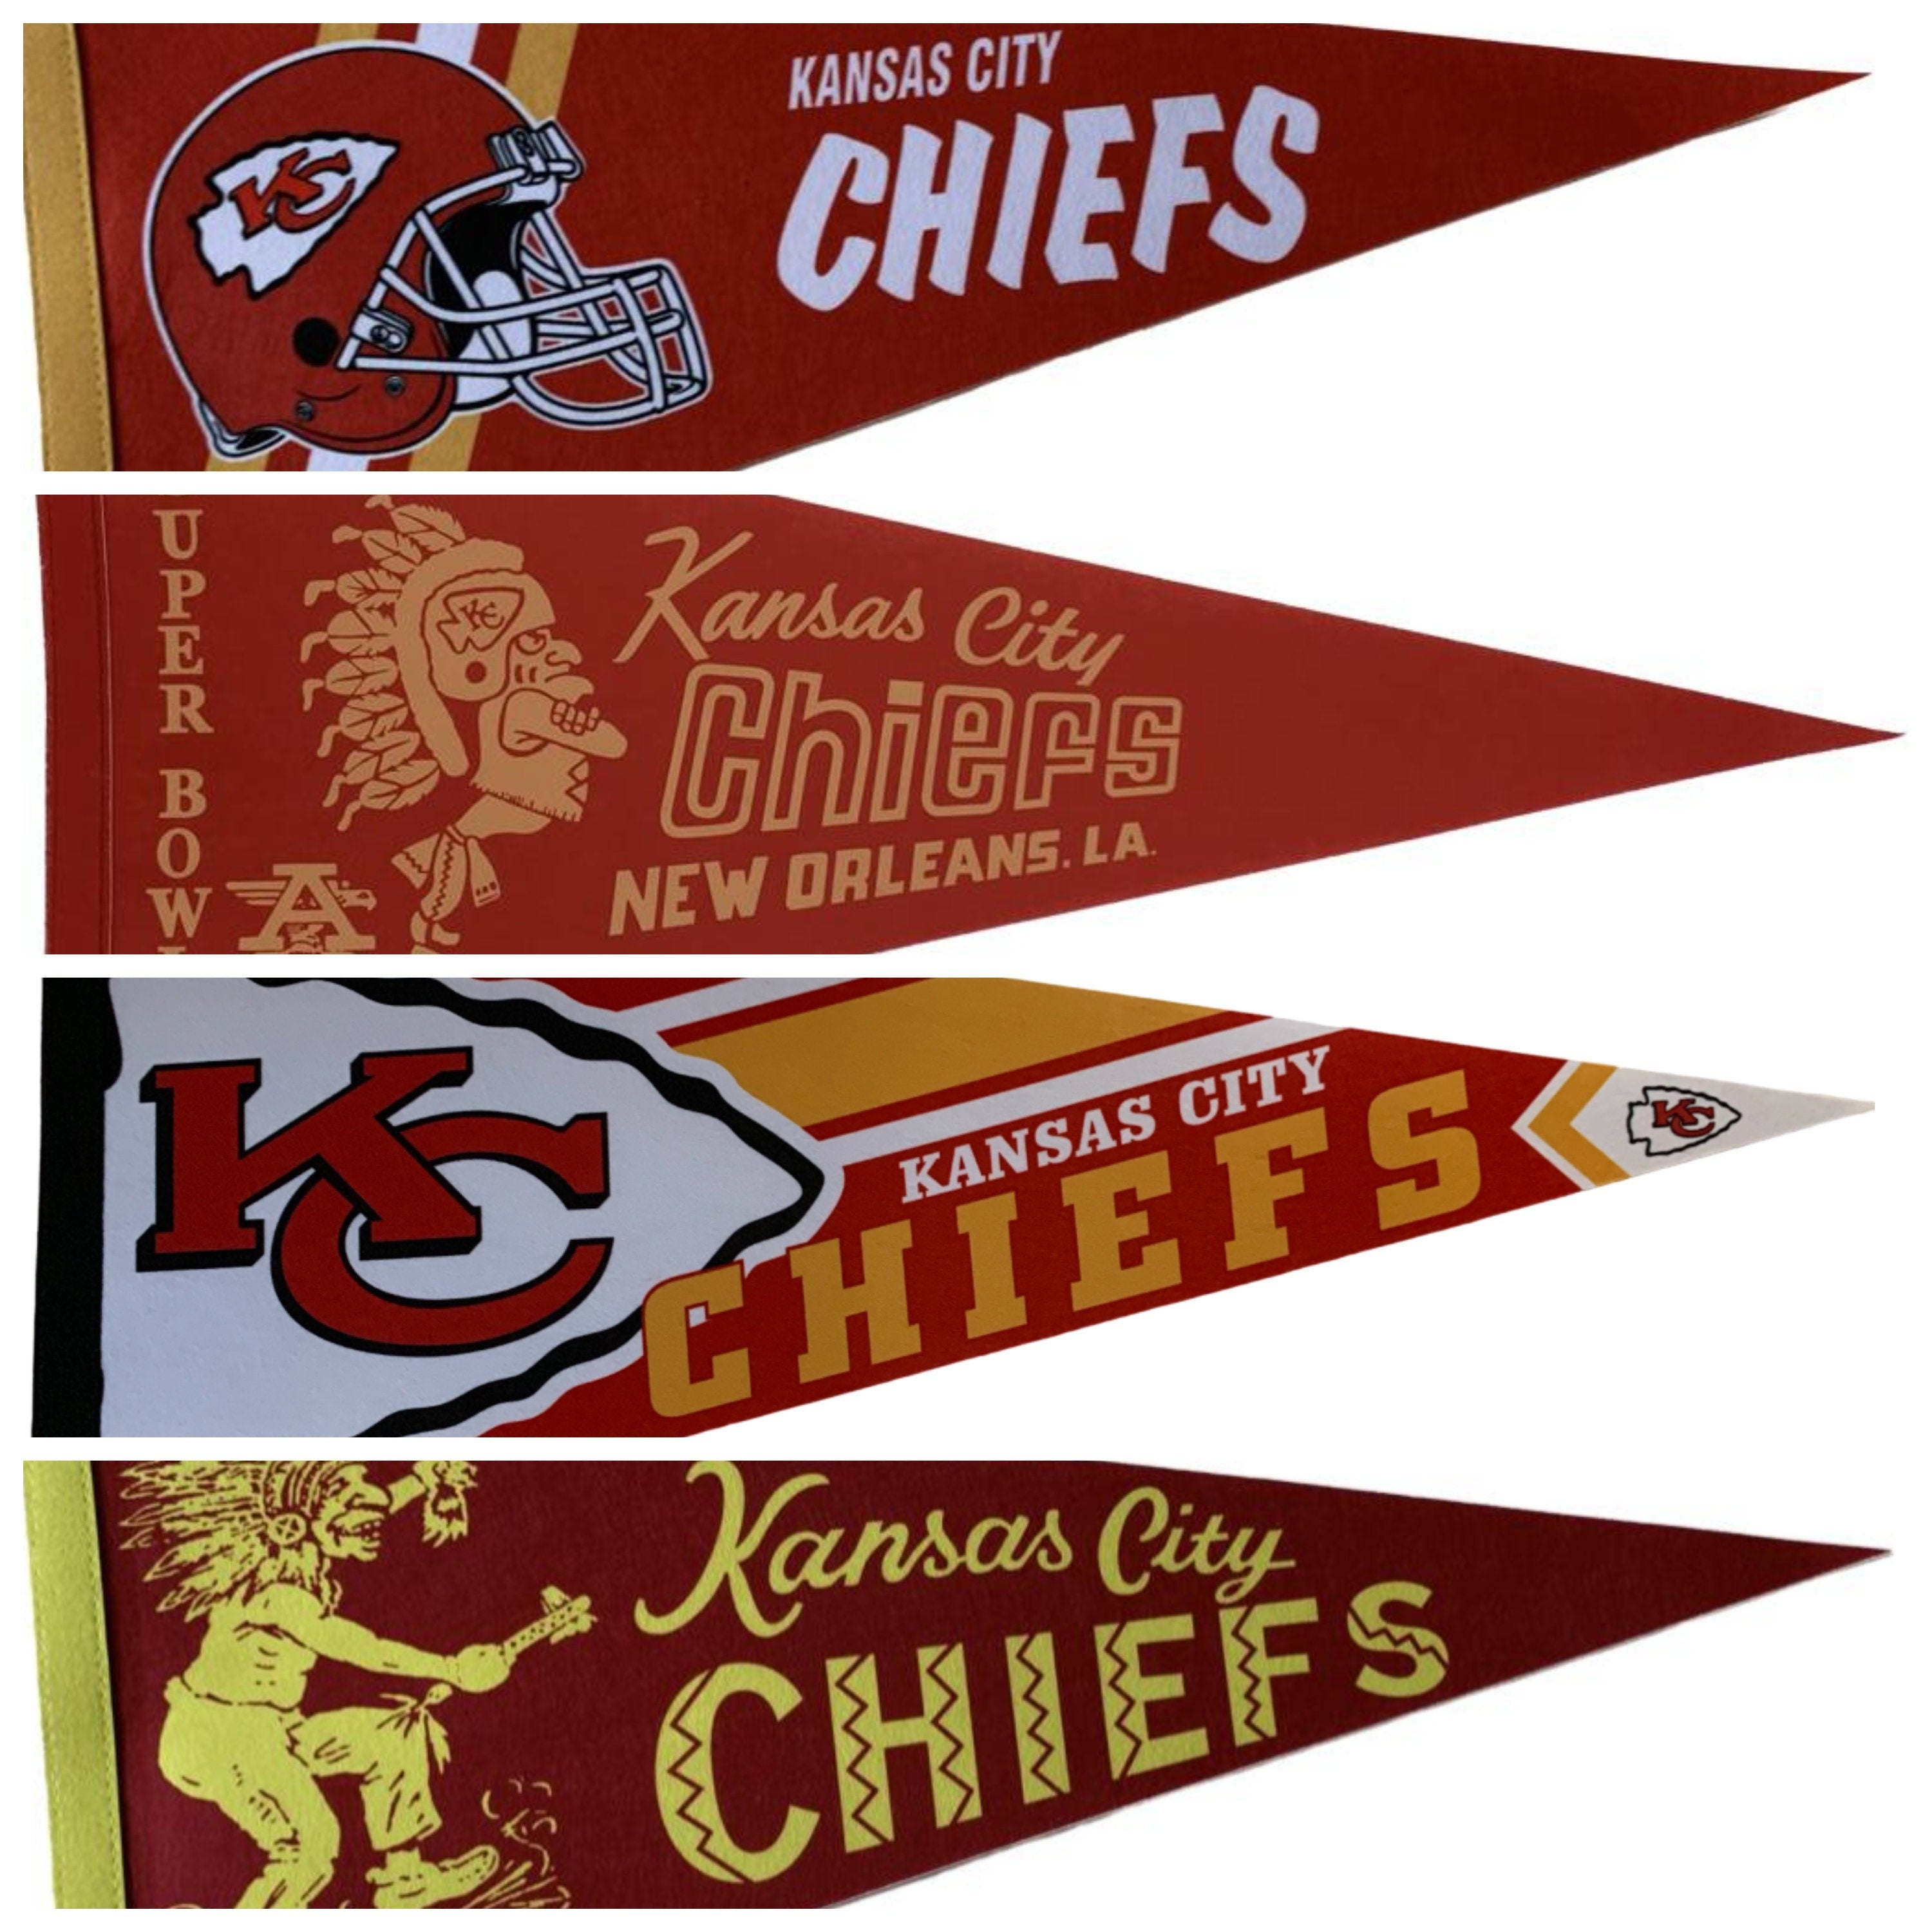 Kansas City Chiefs american football NFL gridiron pennants vaantje vlaggetje vlag fanion pennant flag fahne drapeaux vintage and new finds - Vintage SuperBowl